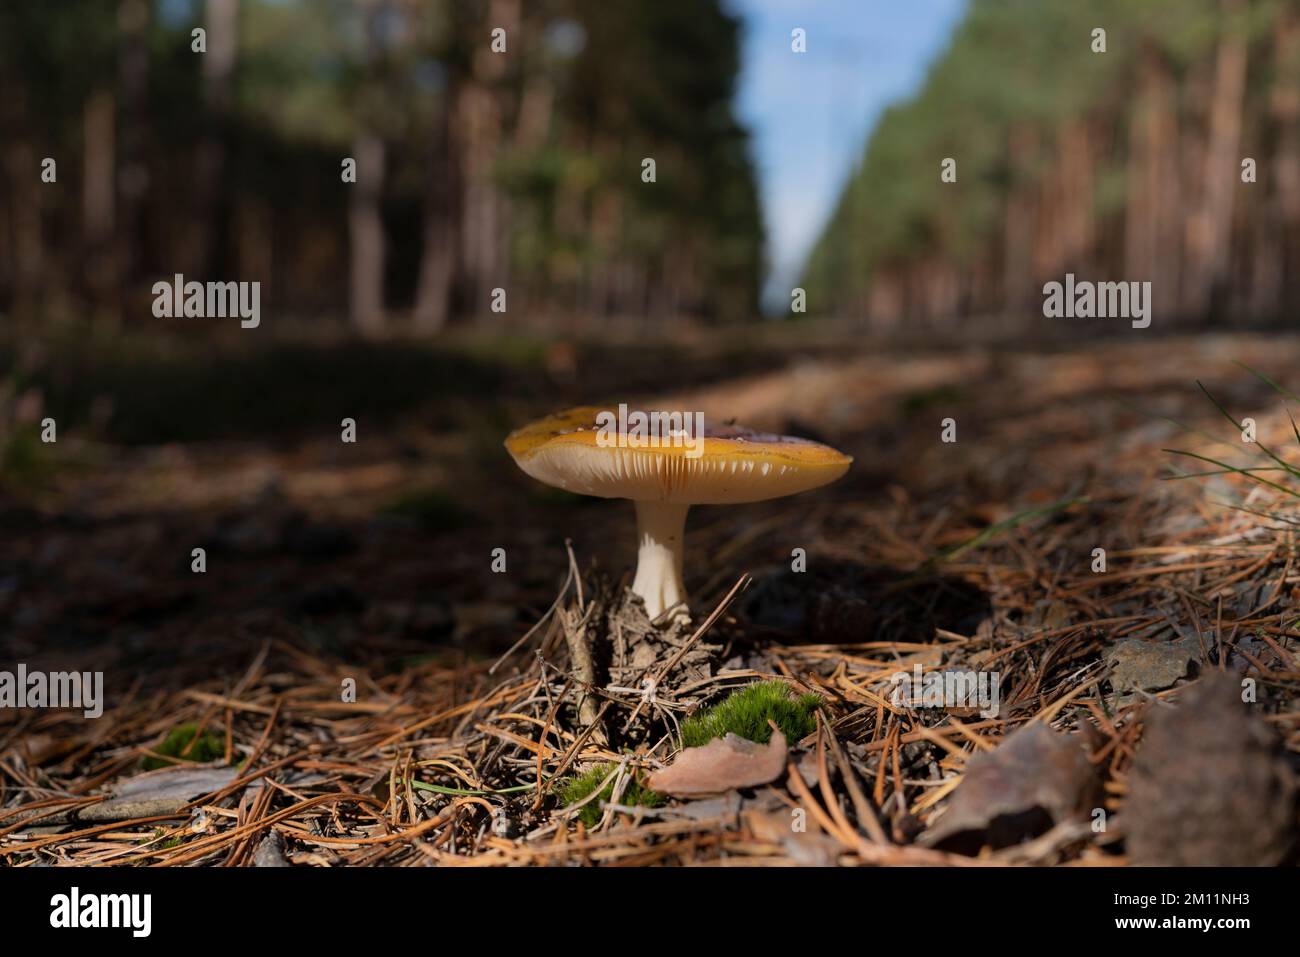 Beginning of autumn, mushroom in the forest, macro image Stock Photo